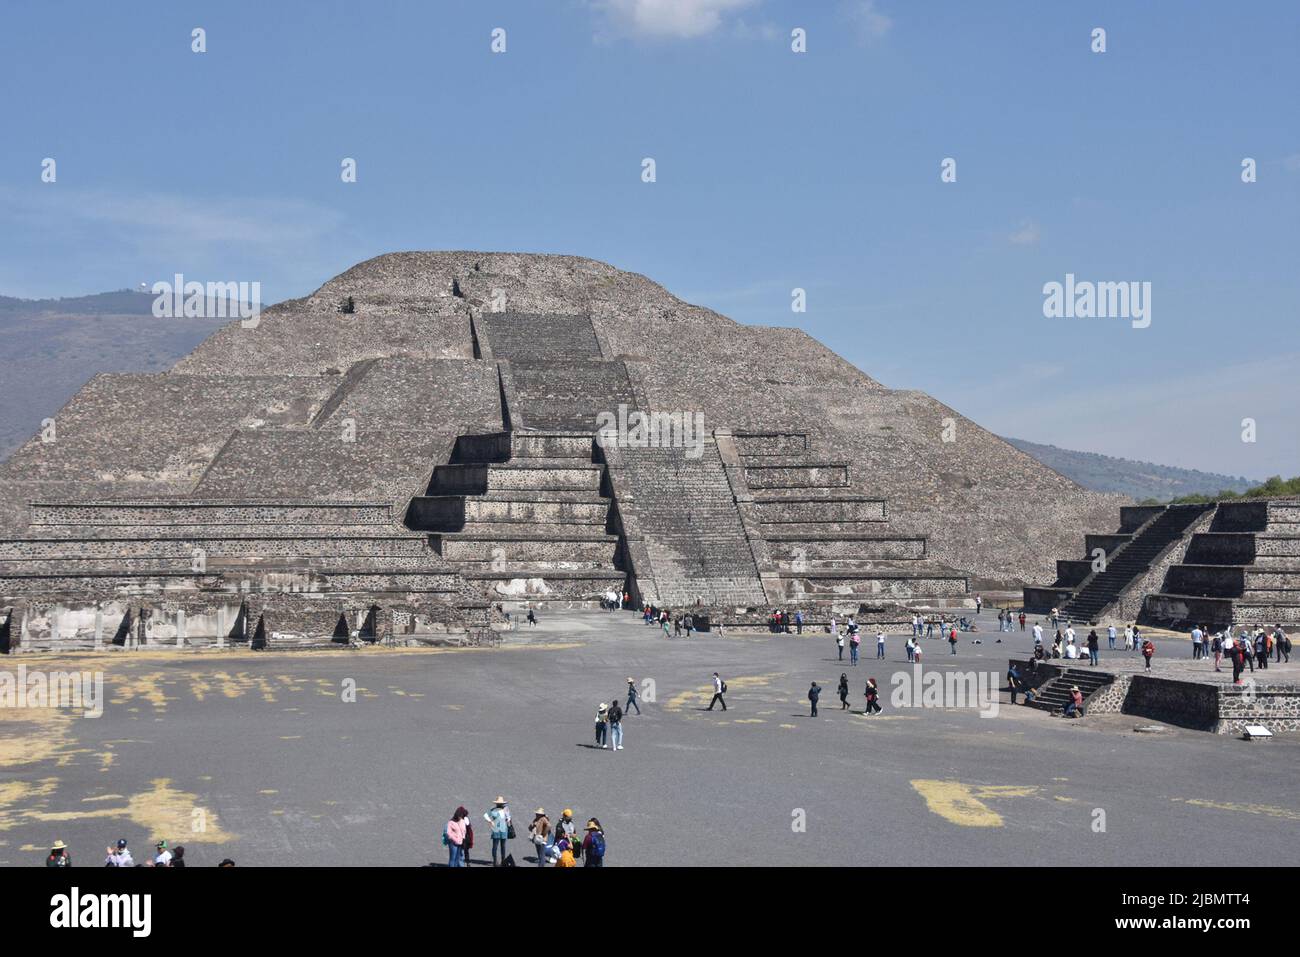 Pyramid of the Moon, Teotihuacán, Mexico. Stock Photo